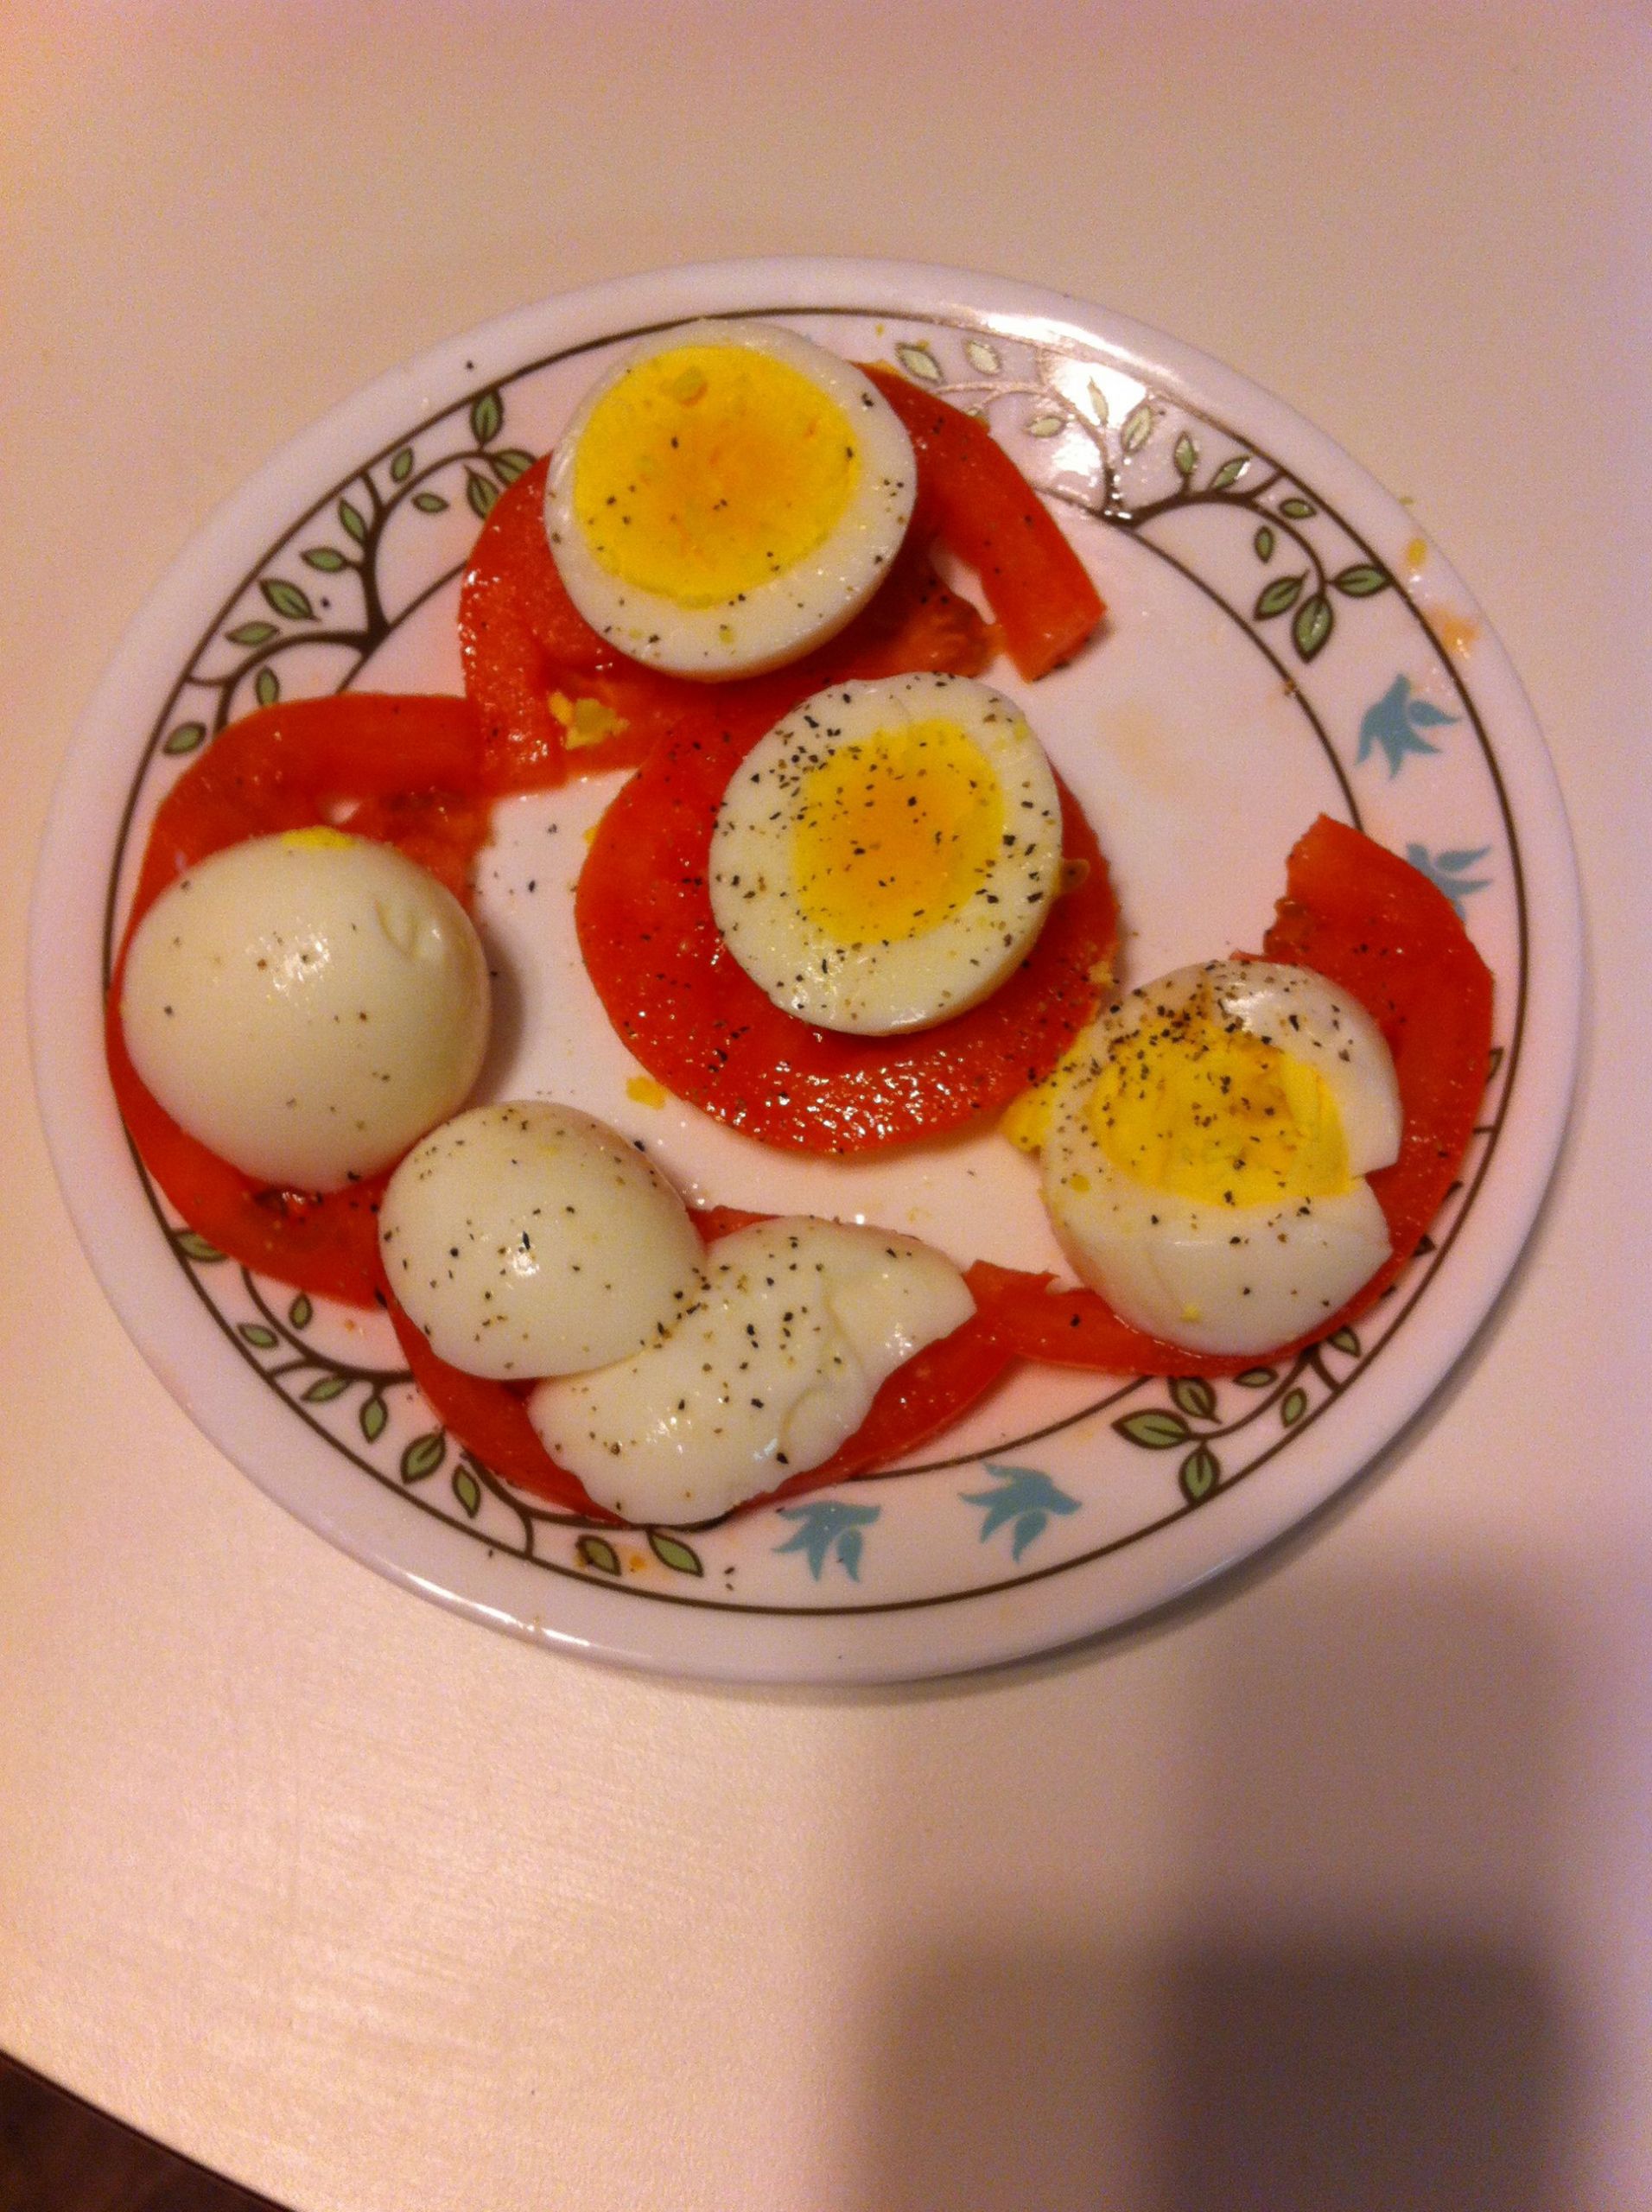 Alternative To Eggs For Breakfast
 2 hard boiled eggs on tomatoe slices A great alternative